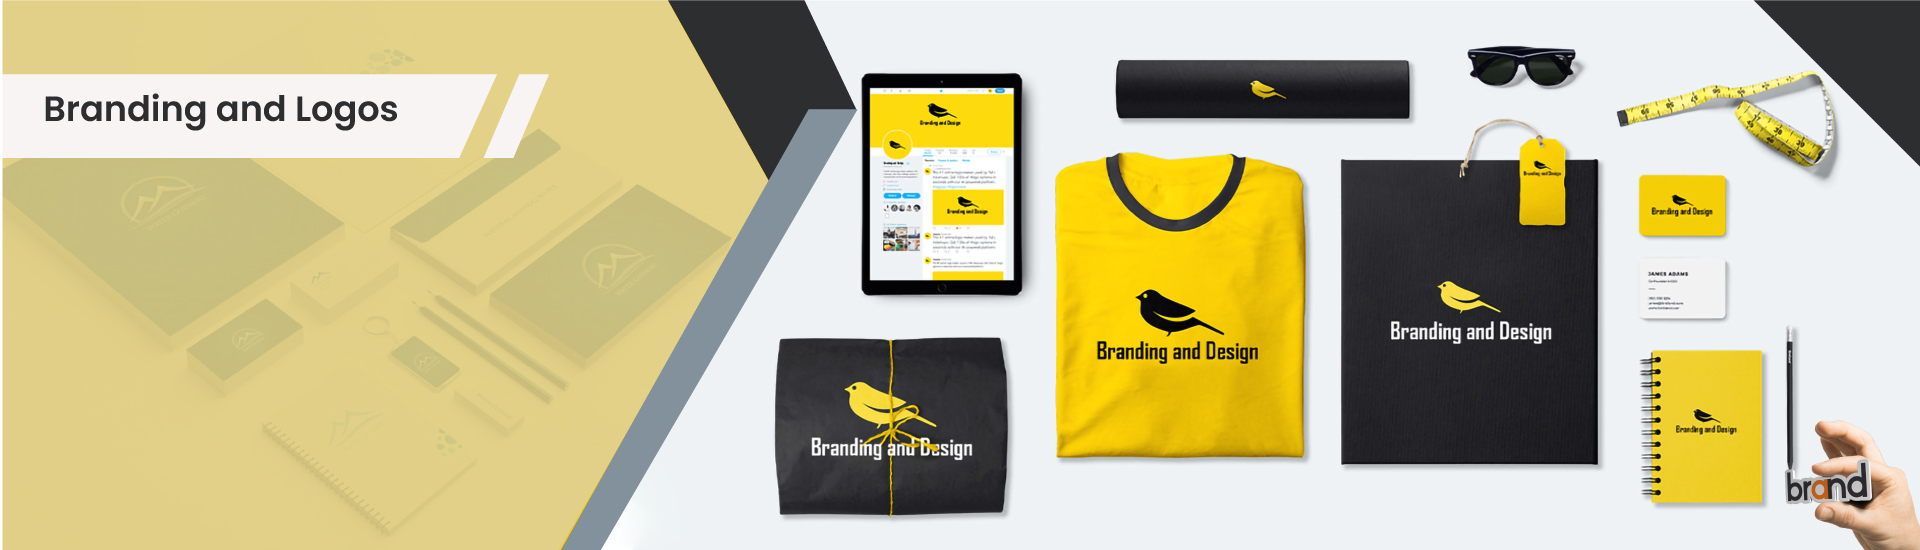 Branding and logos printing service in dubai